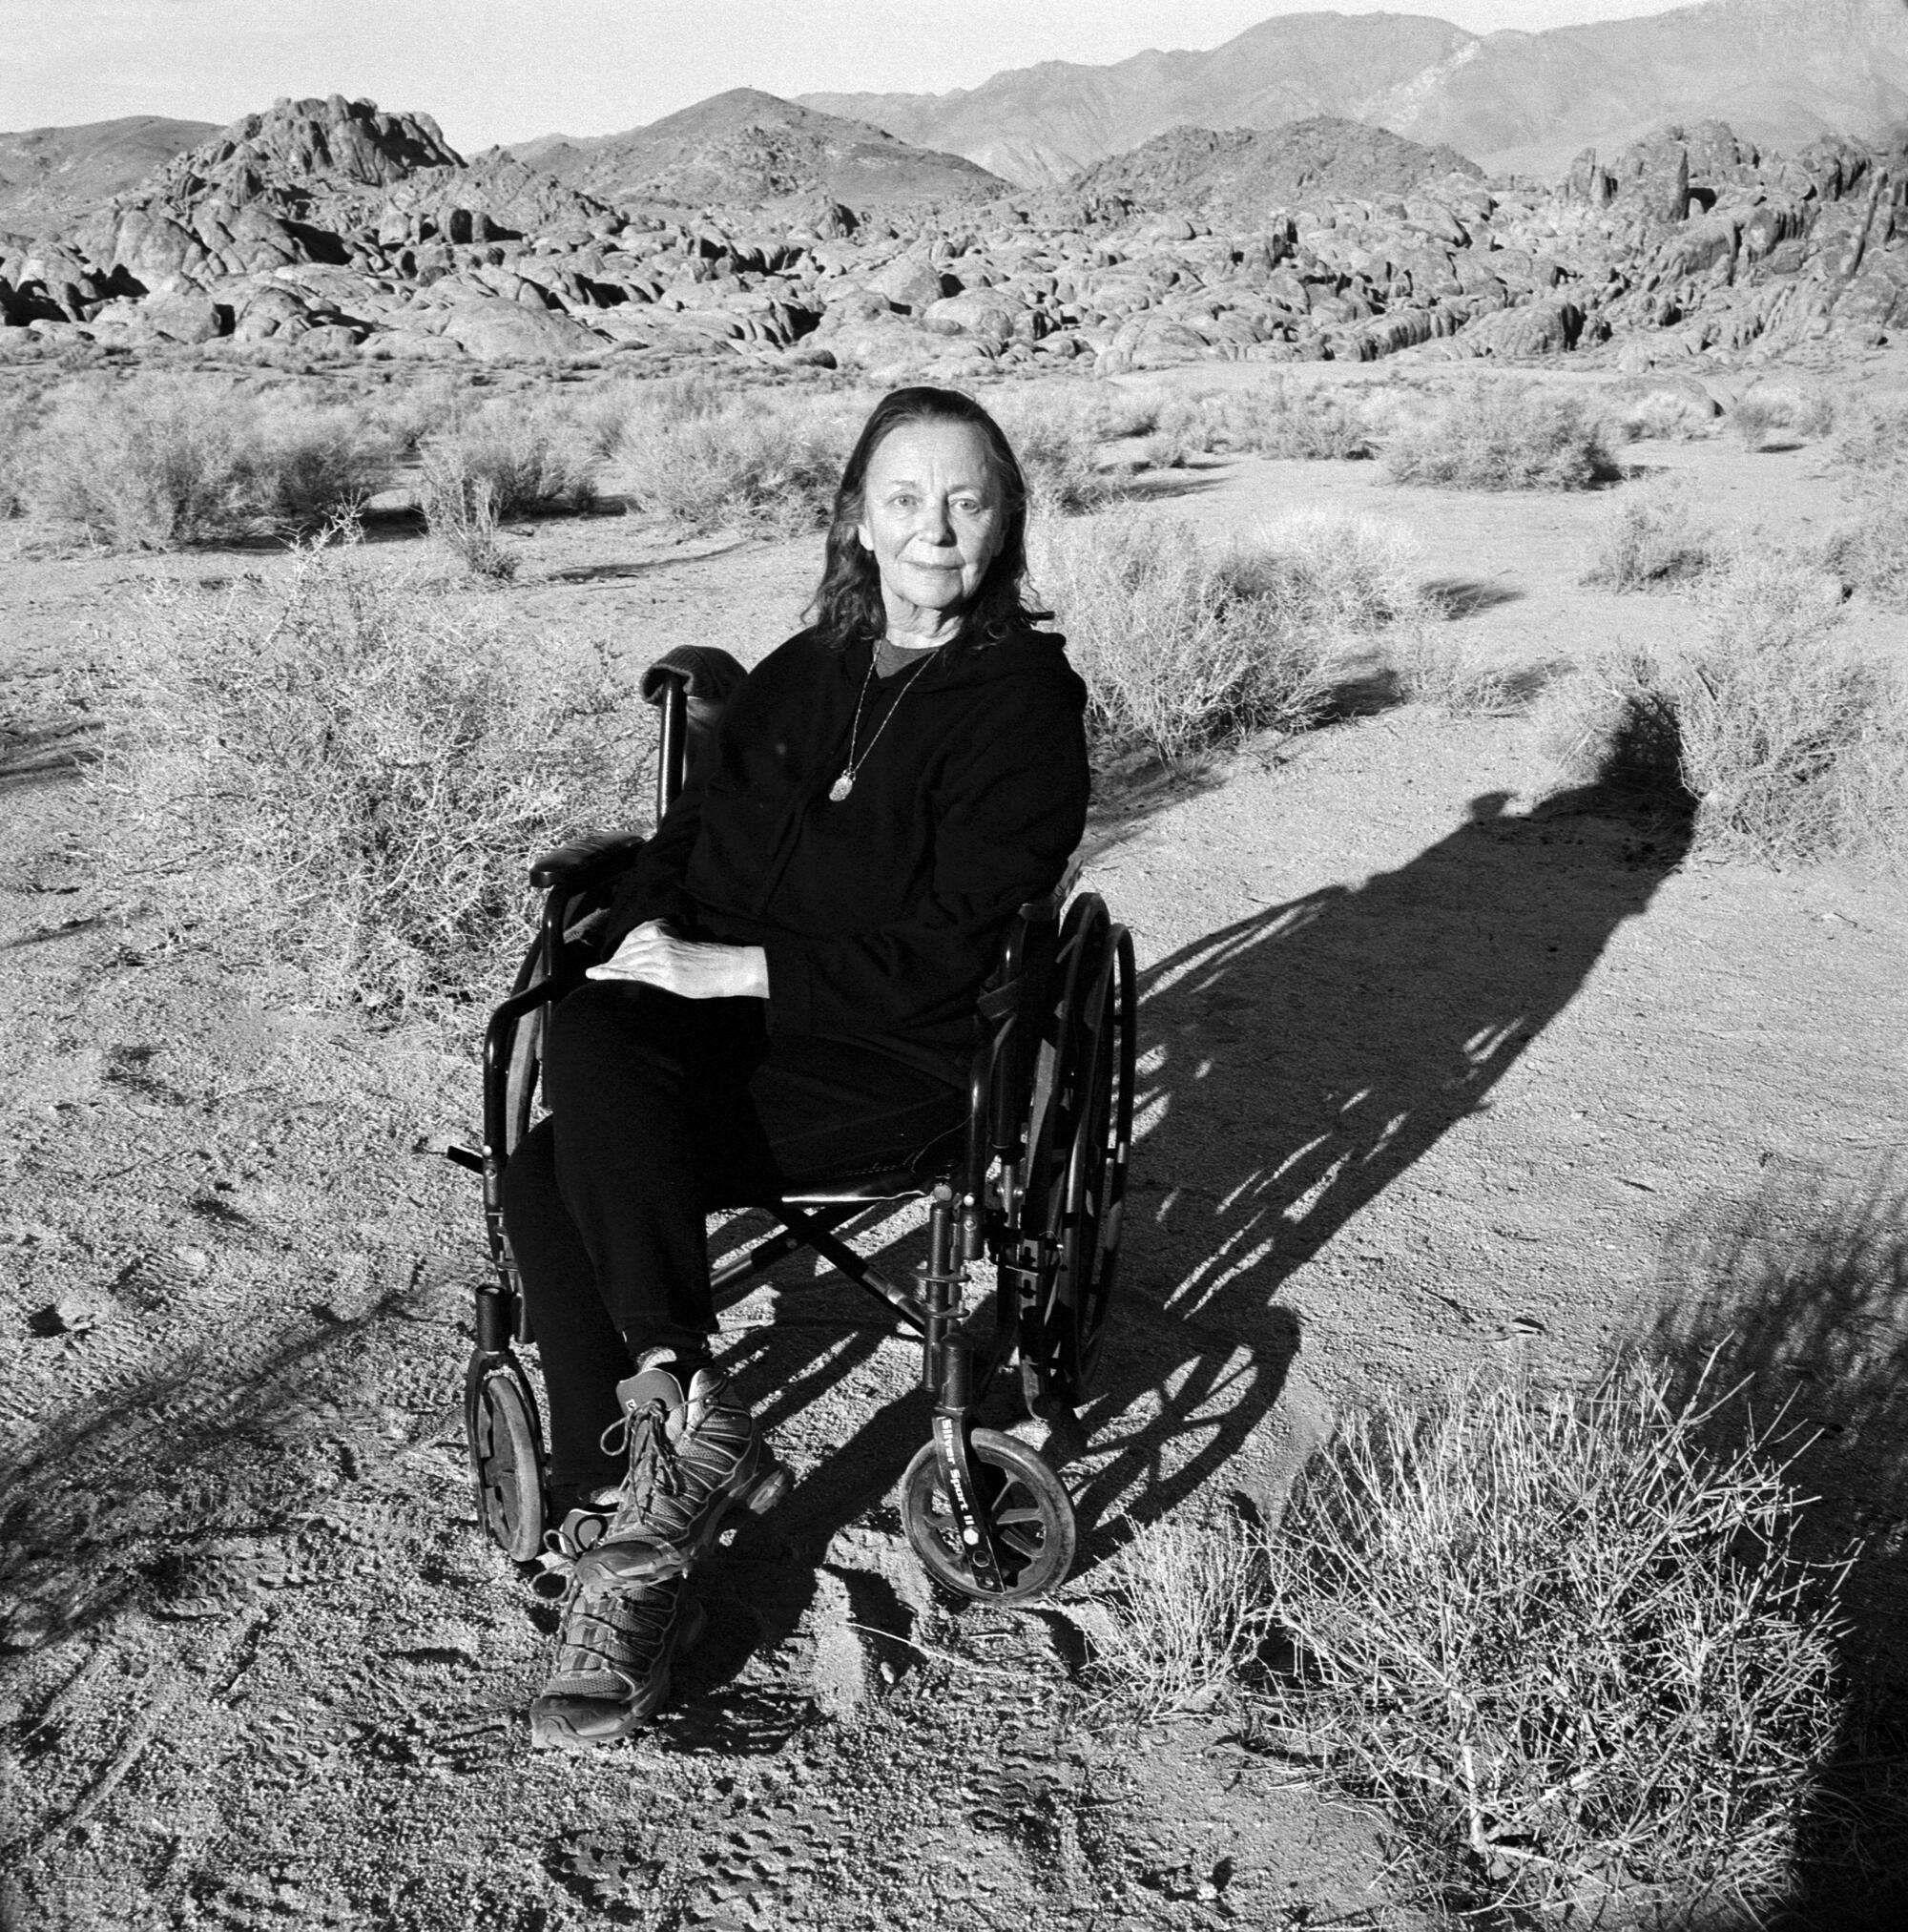 Marianne Wiggins sits in a hilly, desert landscape.